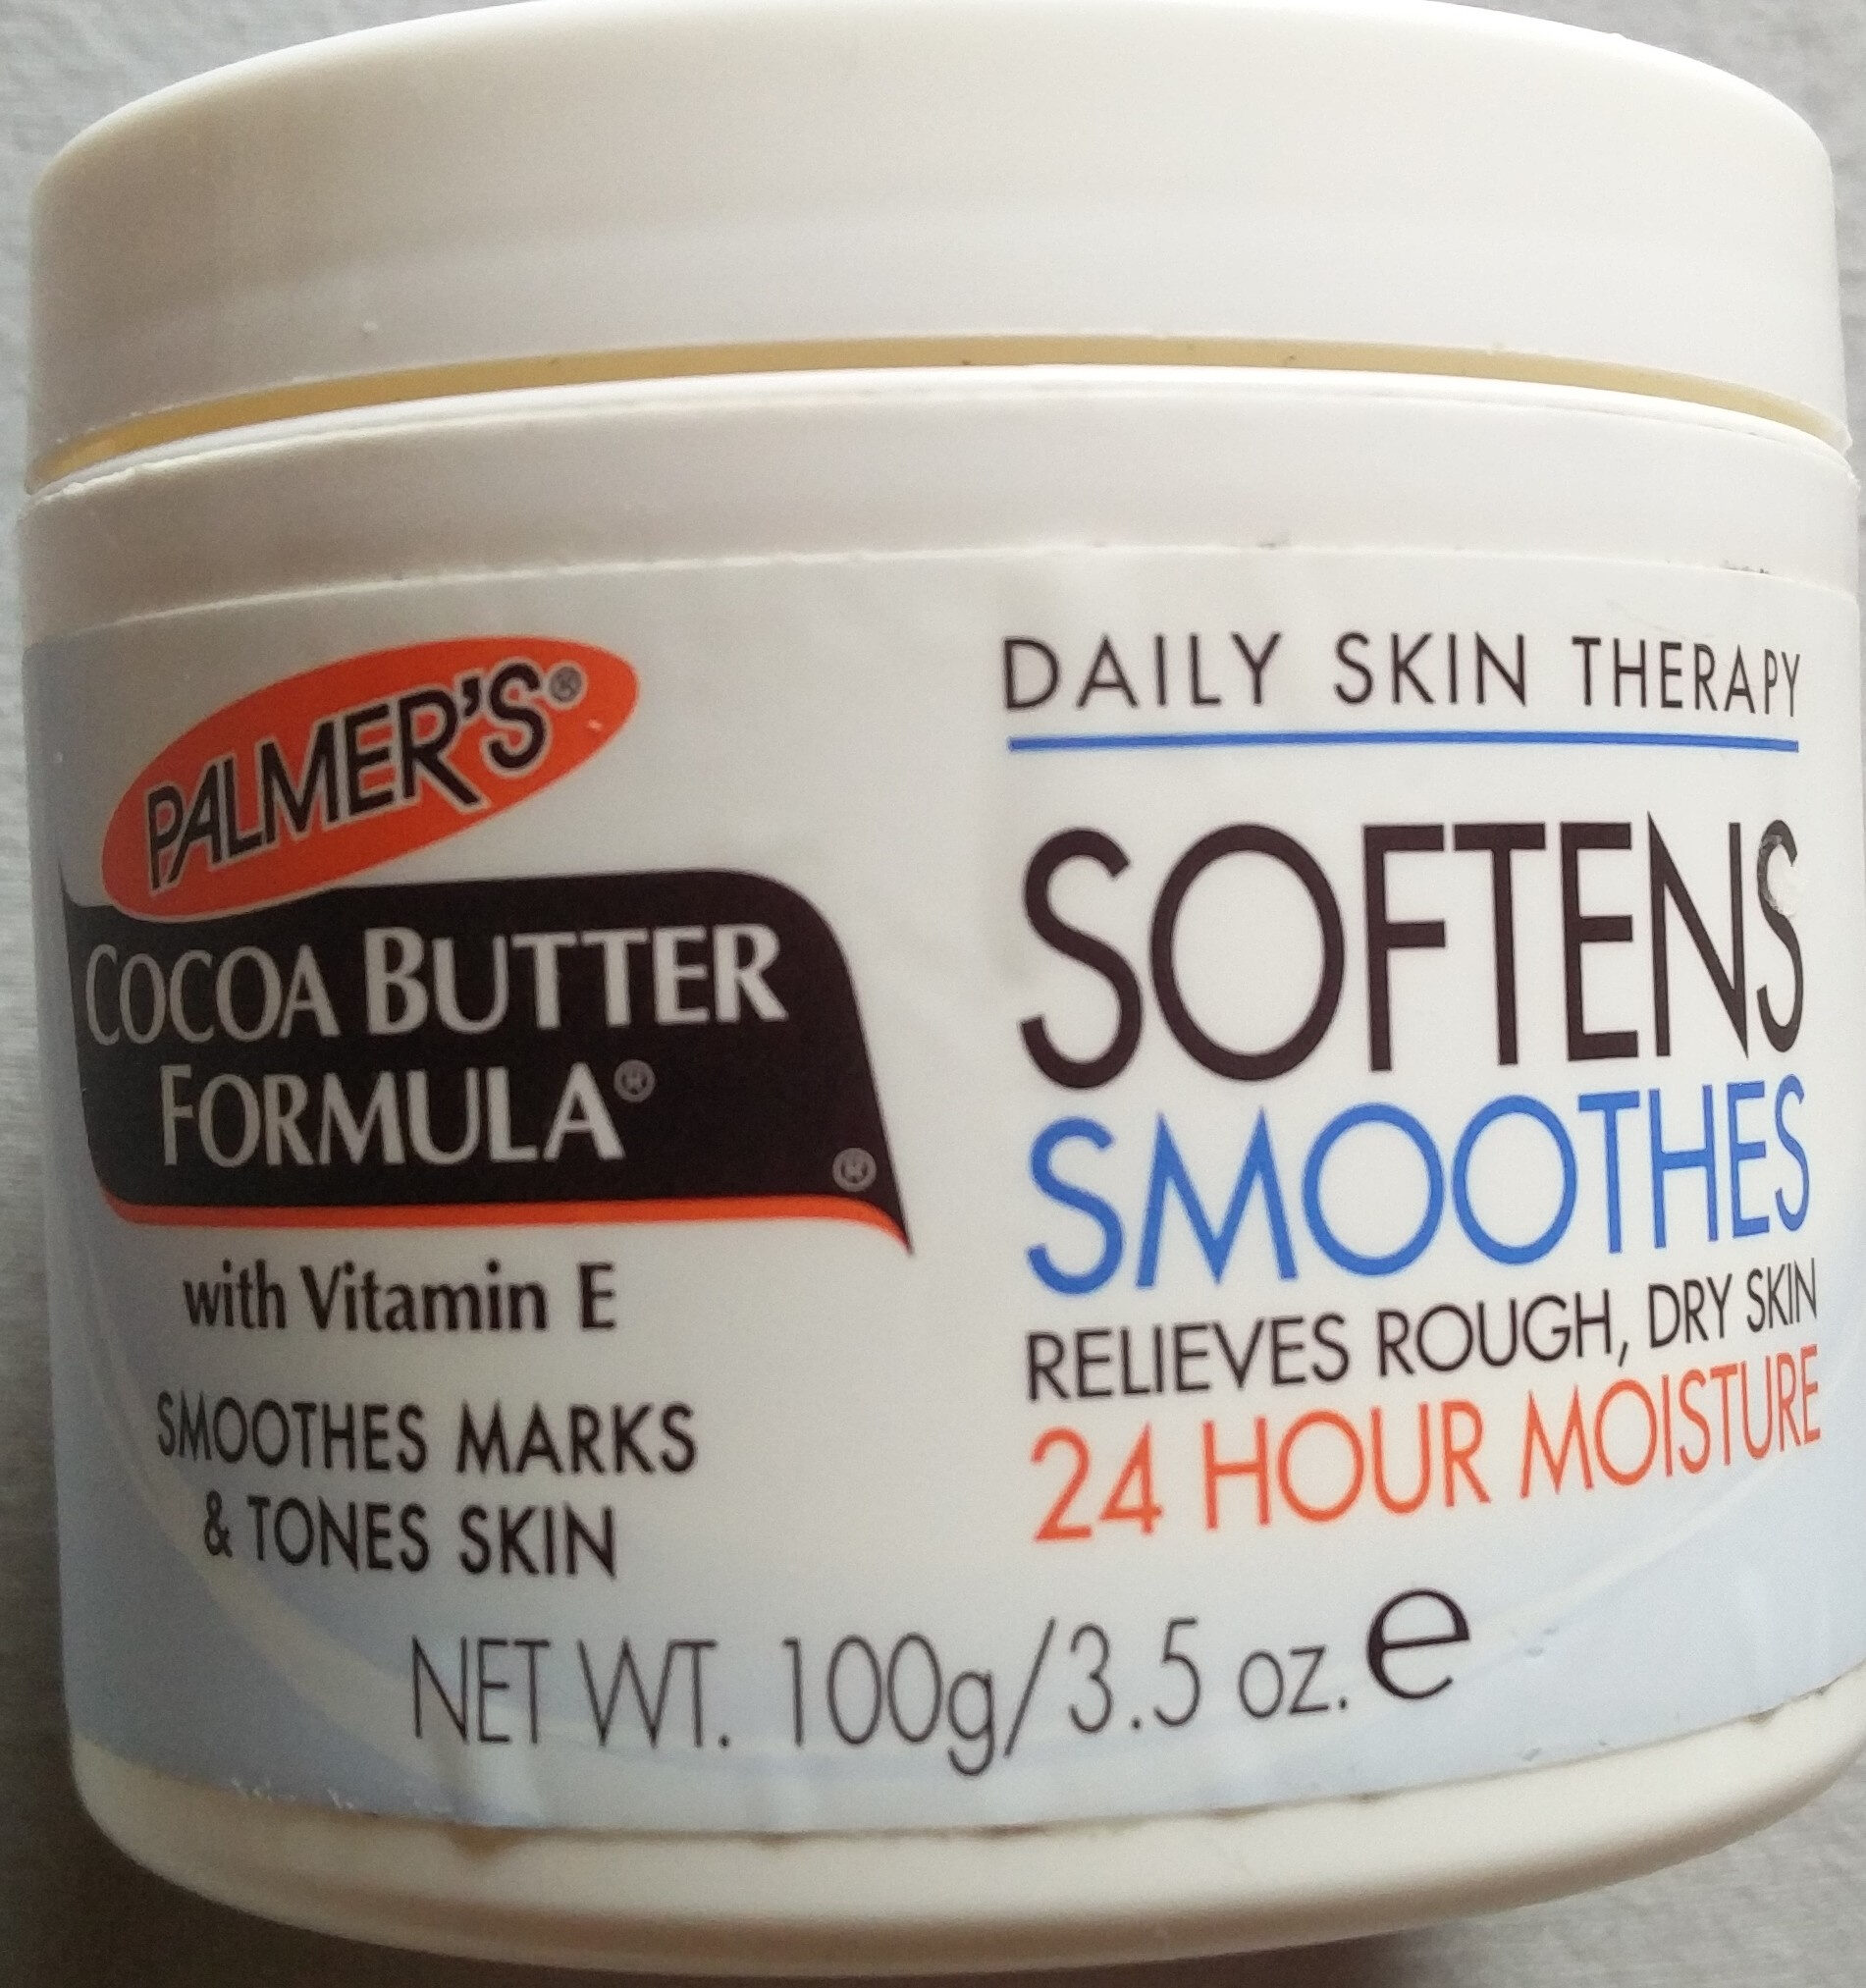 cocoa butter formula with vitamin E - Product - en